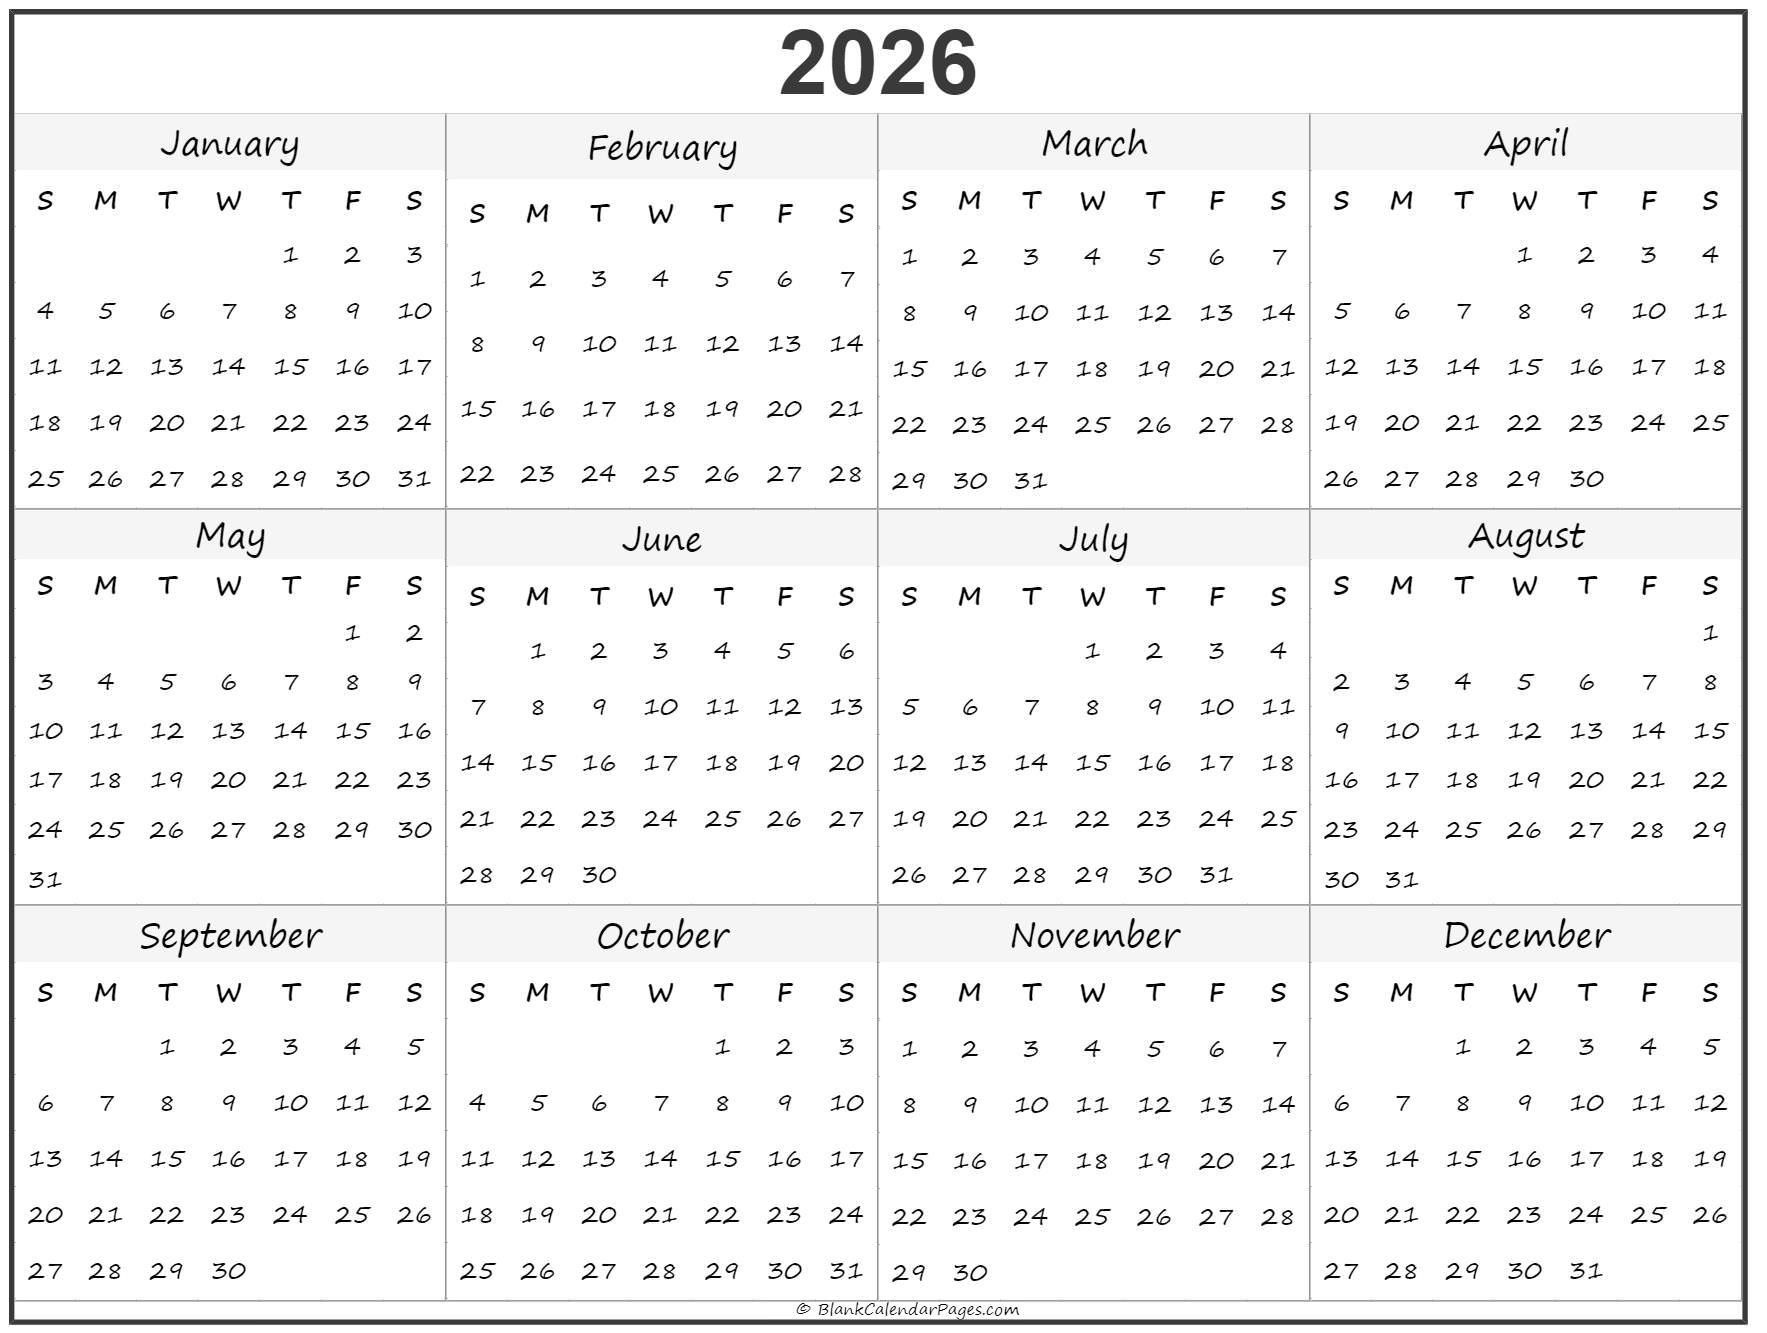 2026 year calendar template.